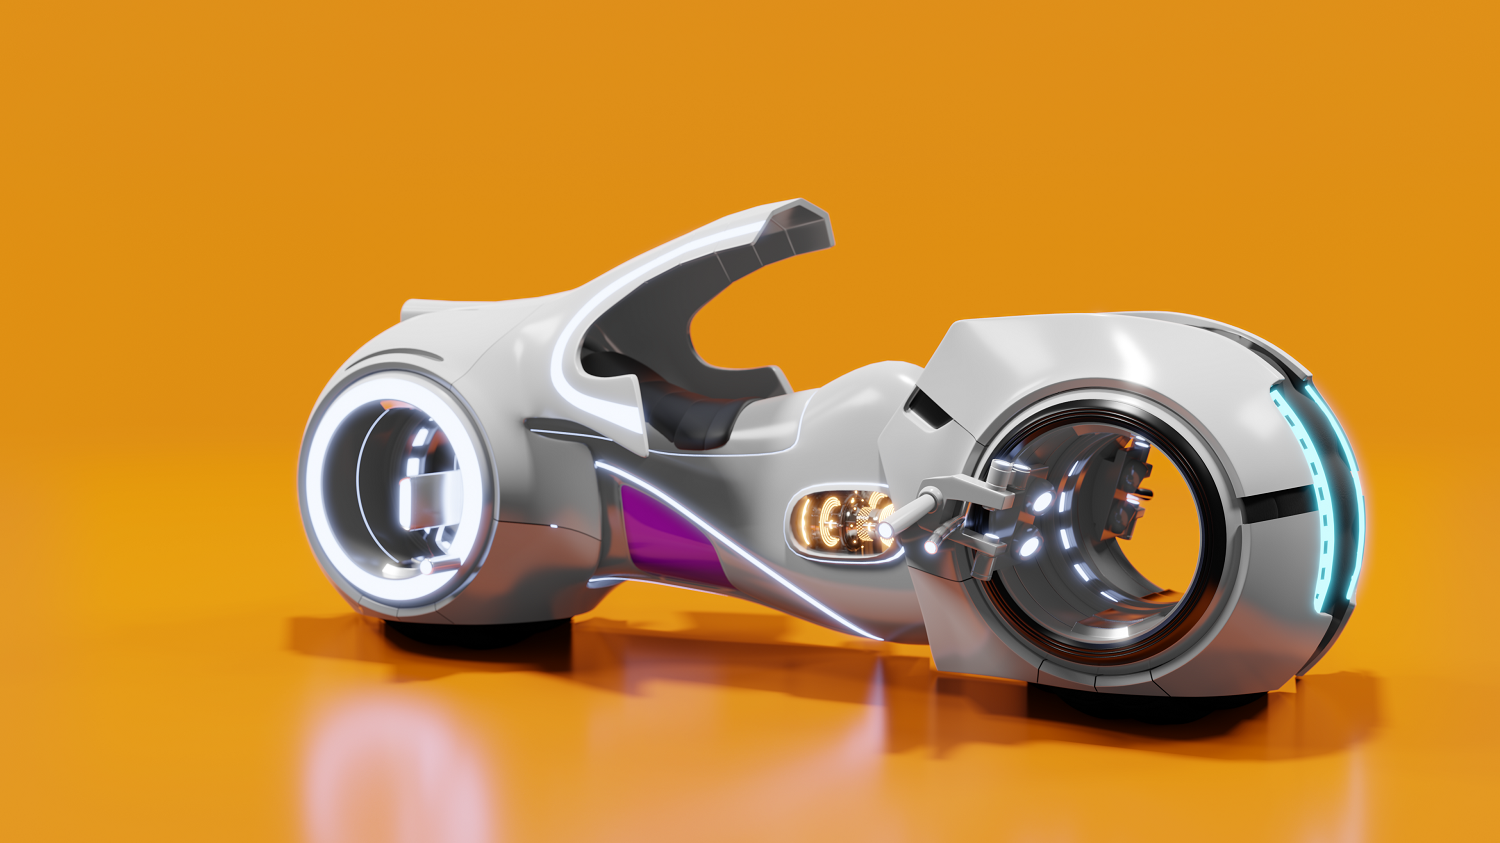 3D Tron Bike Rendered Free Download From Coreldrawdesign